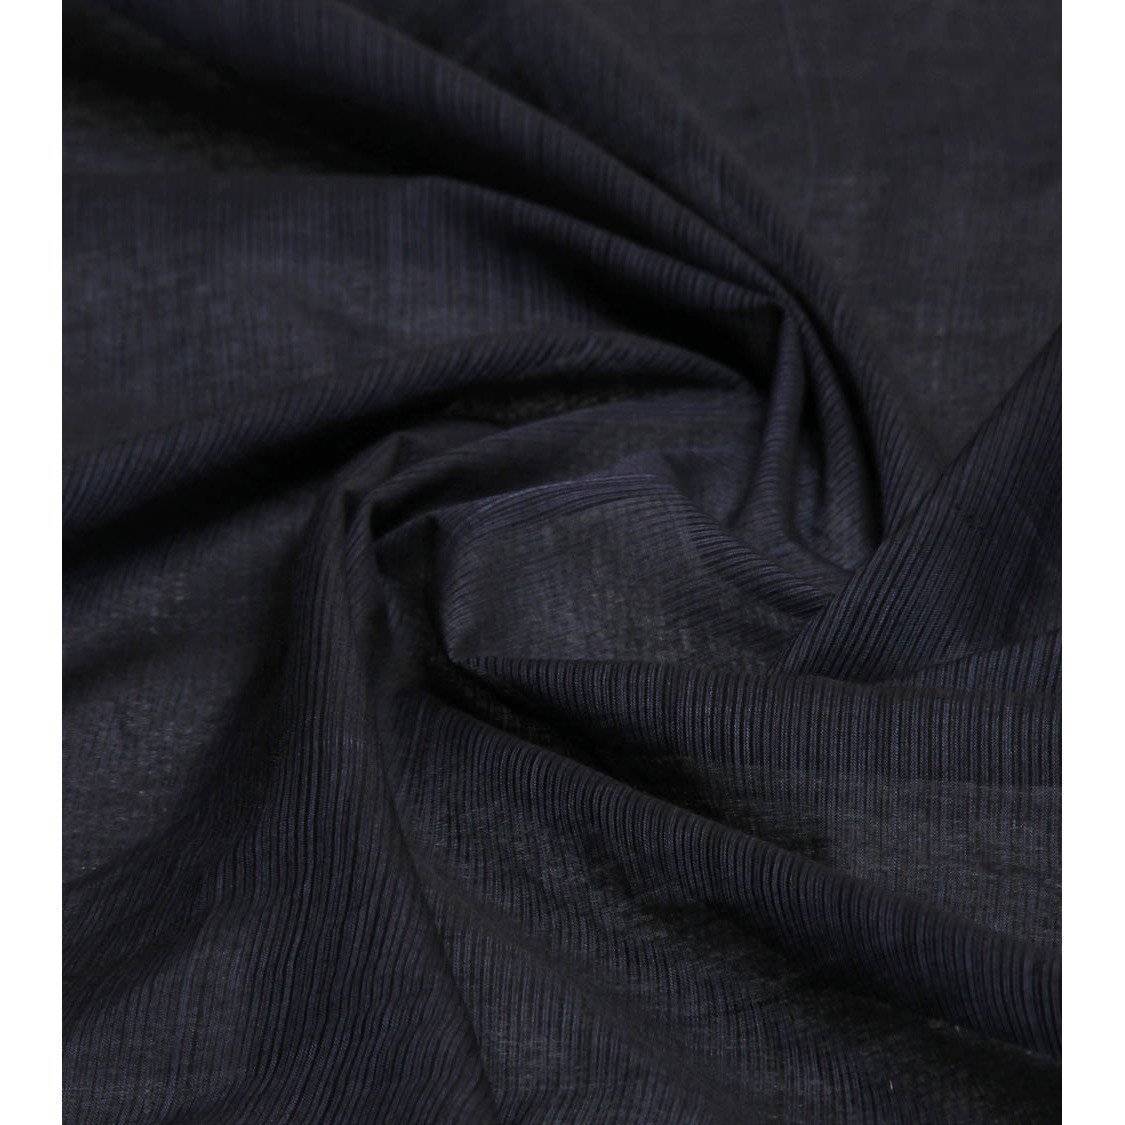 Grey & Black Mangalgiri Cotton Saree